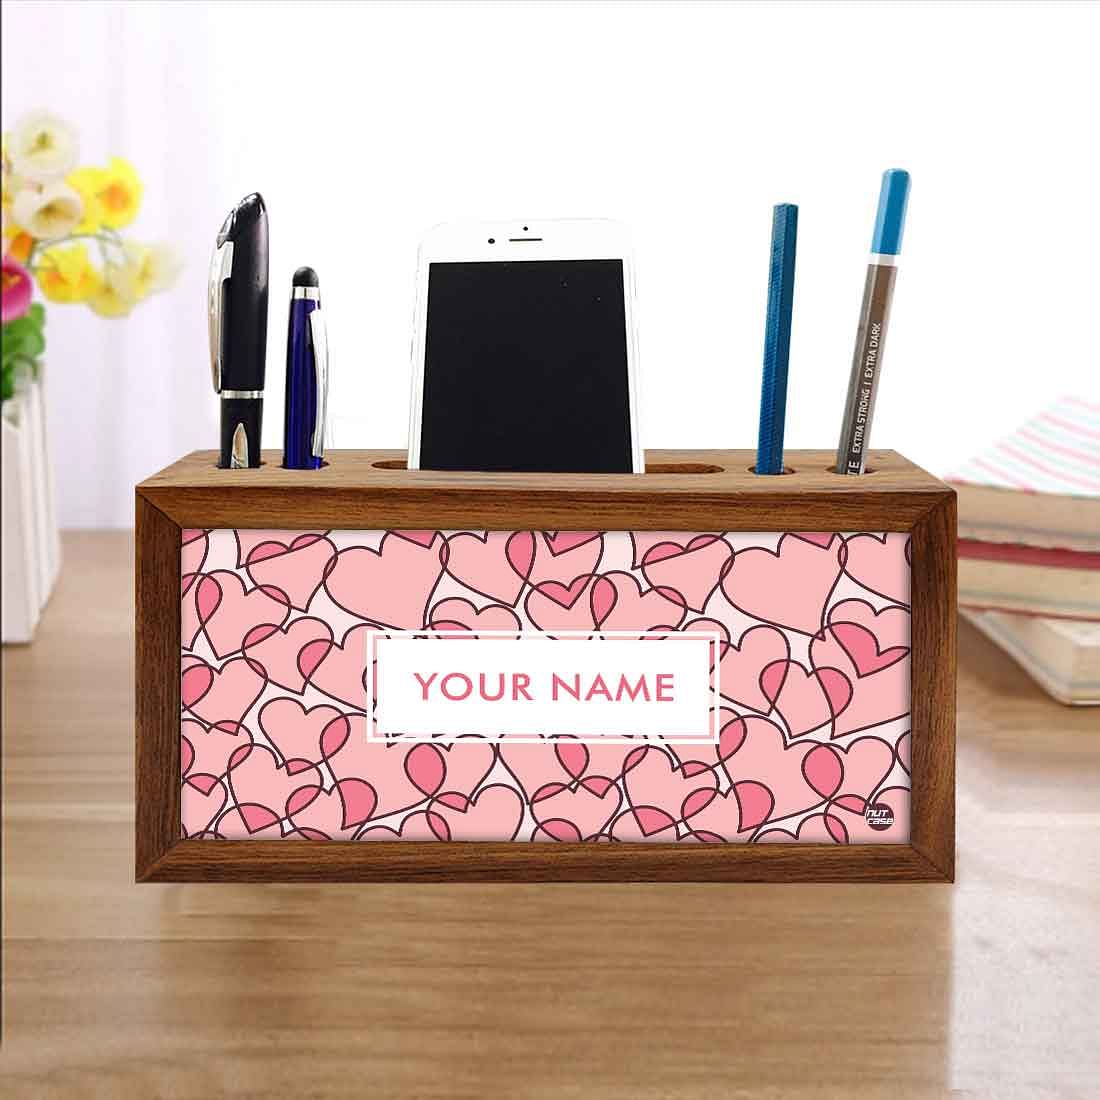 Customized personalised desk organizer - Mix Hearts Nutcase